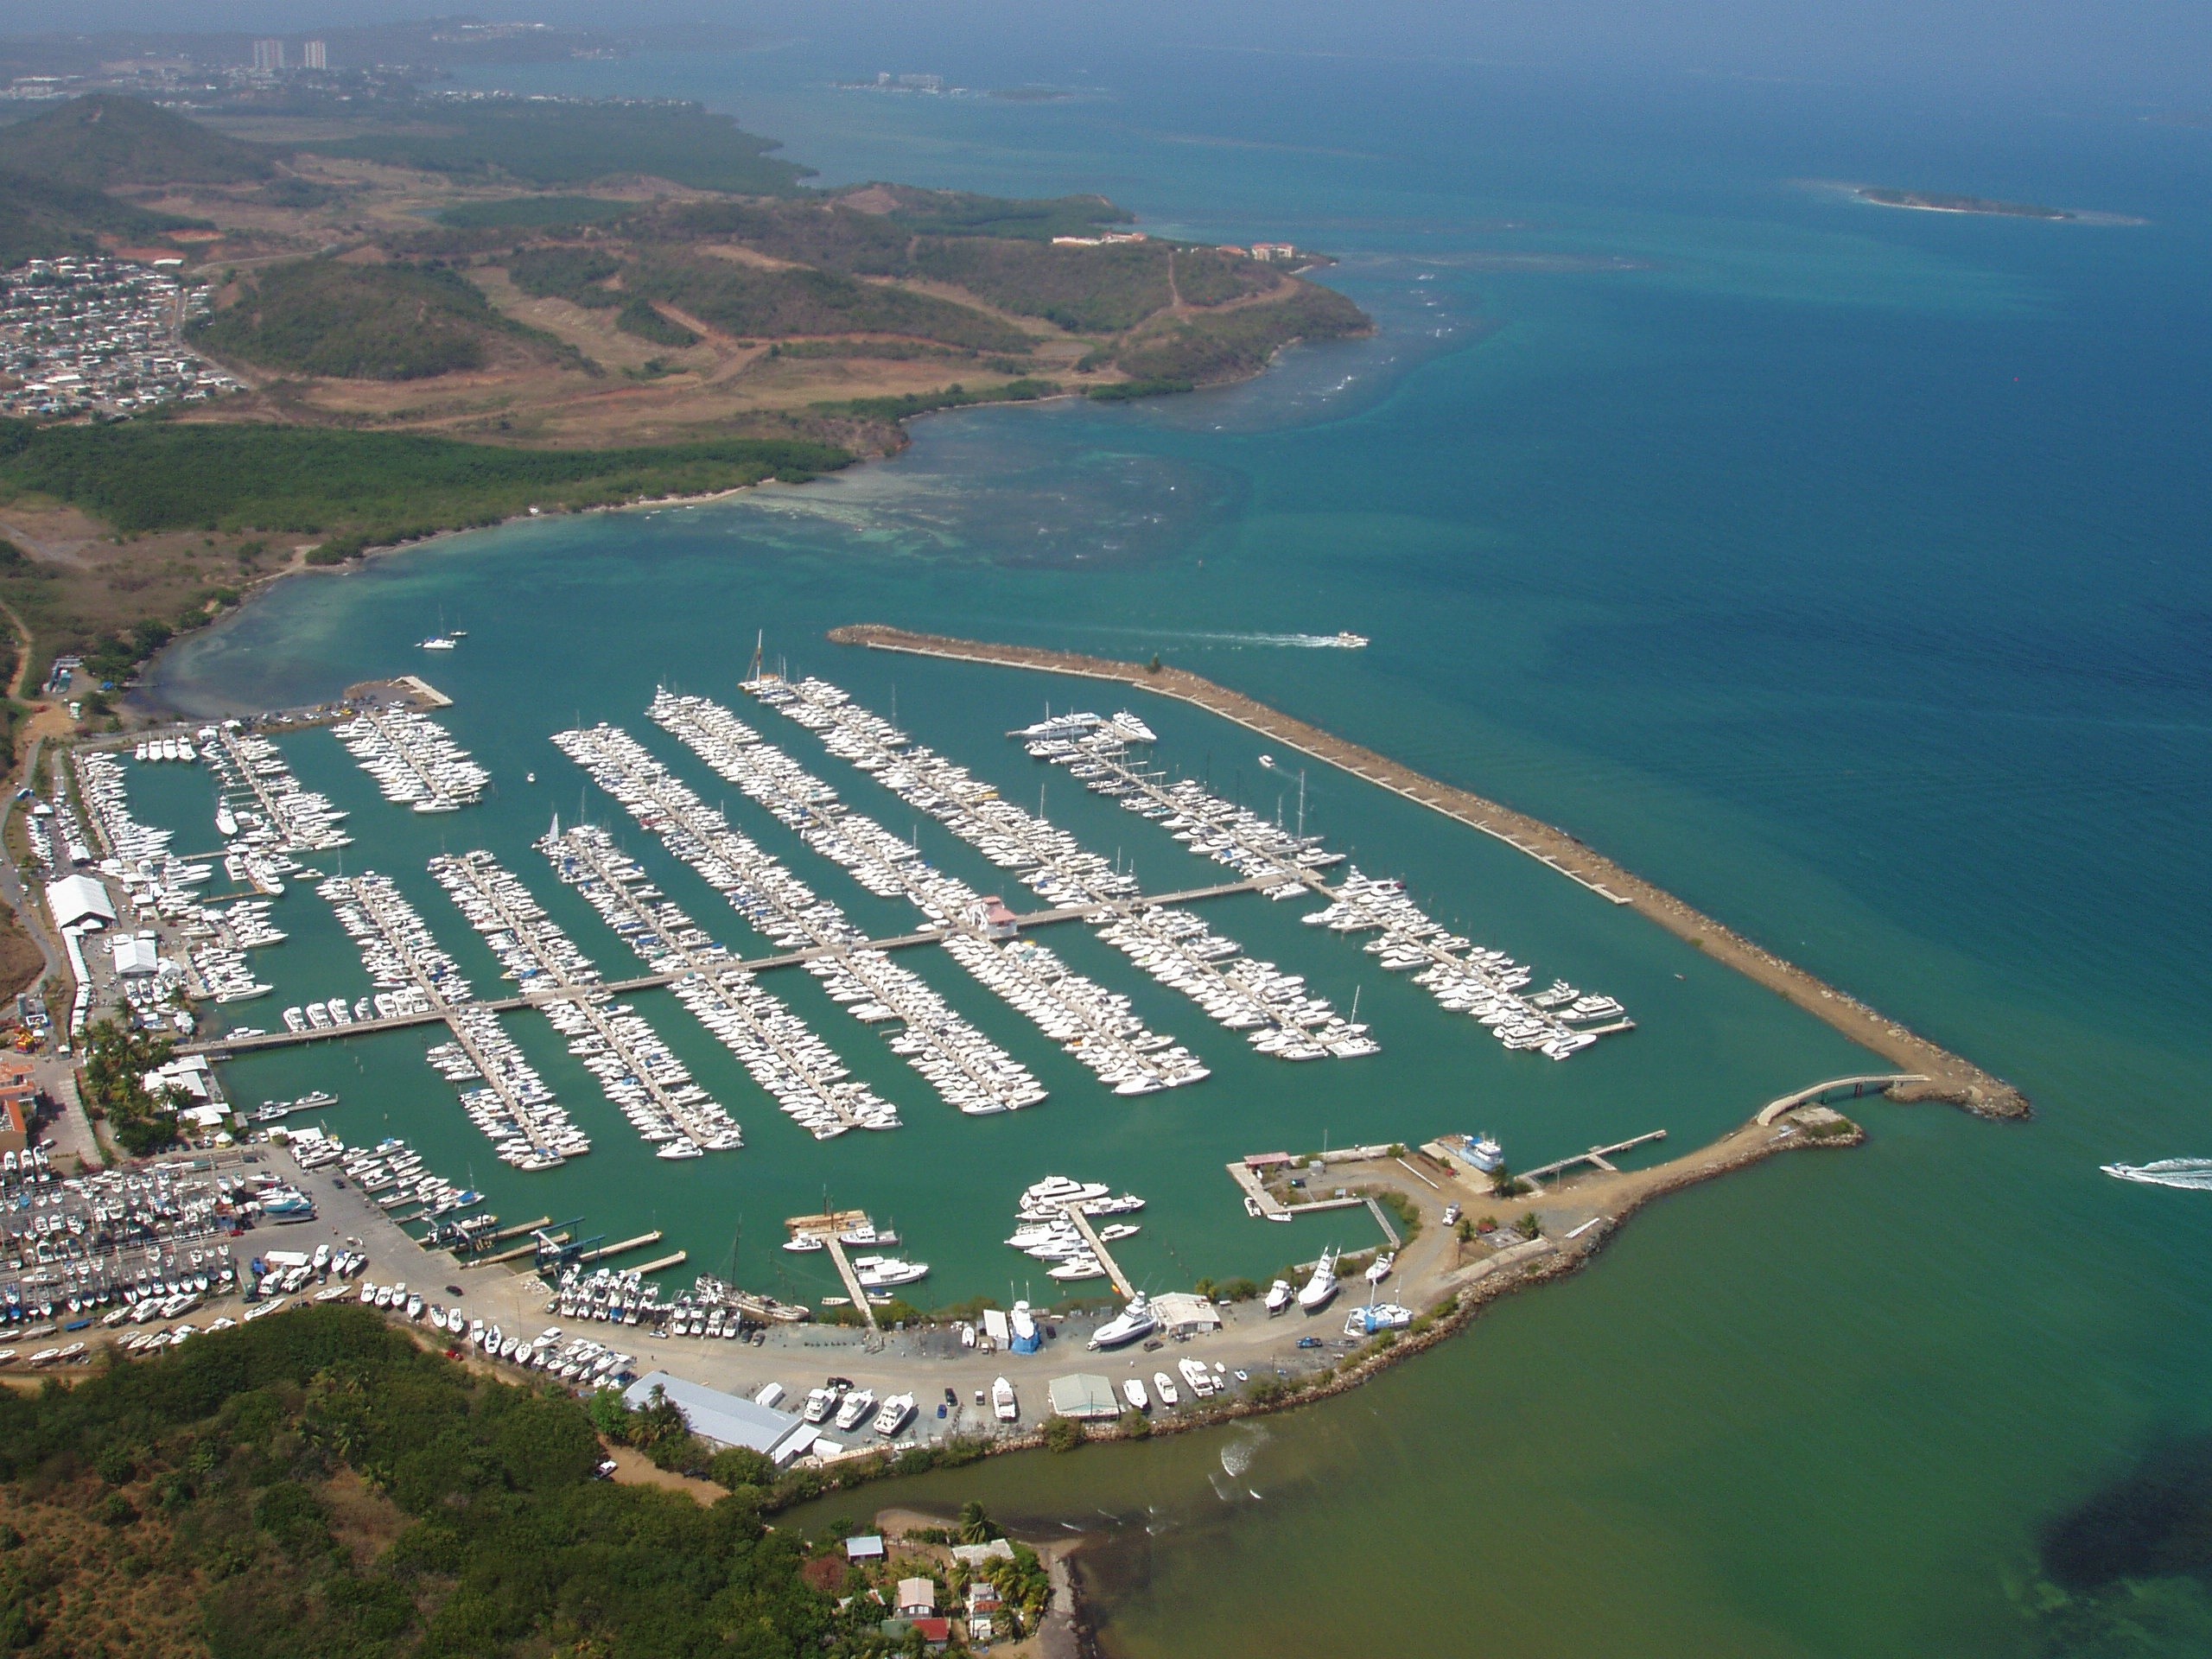 2560x1920 Fajardo, Puerto Rico - Puerto Del Rey Marina - this is the largest marina in